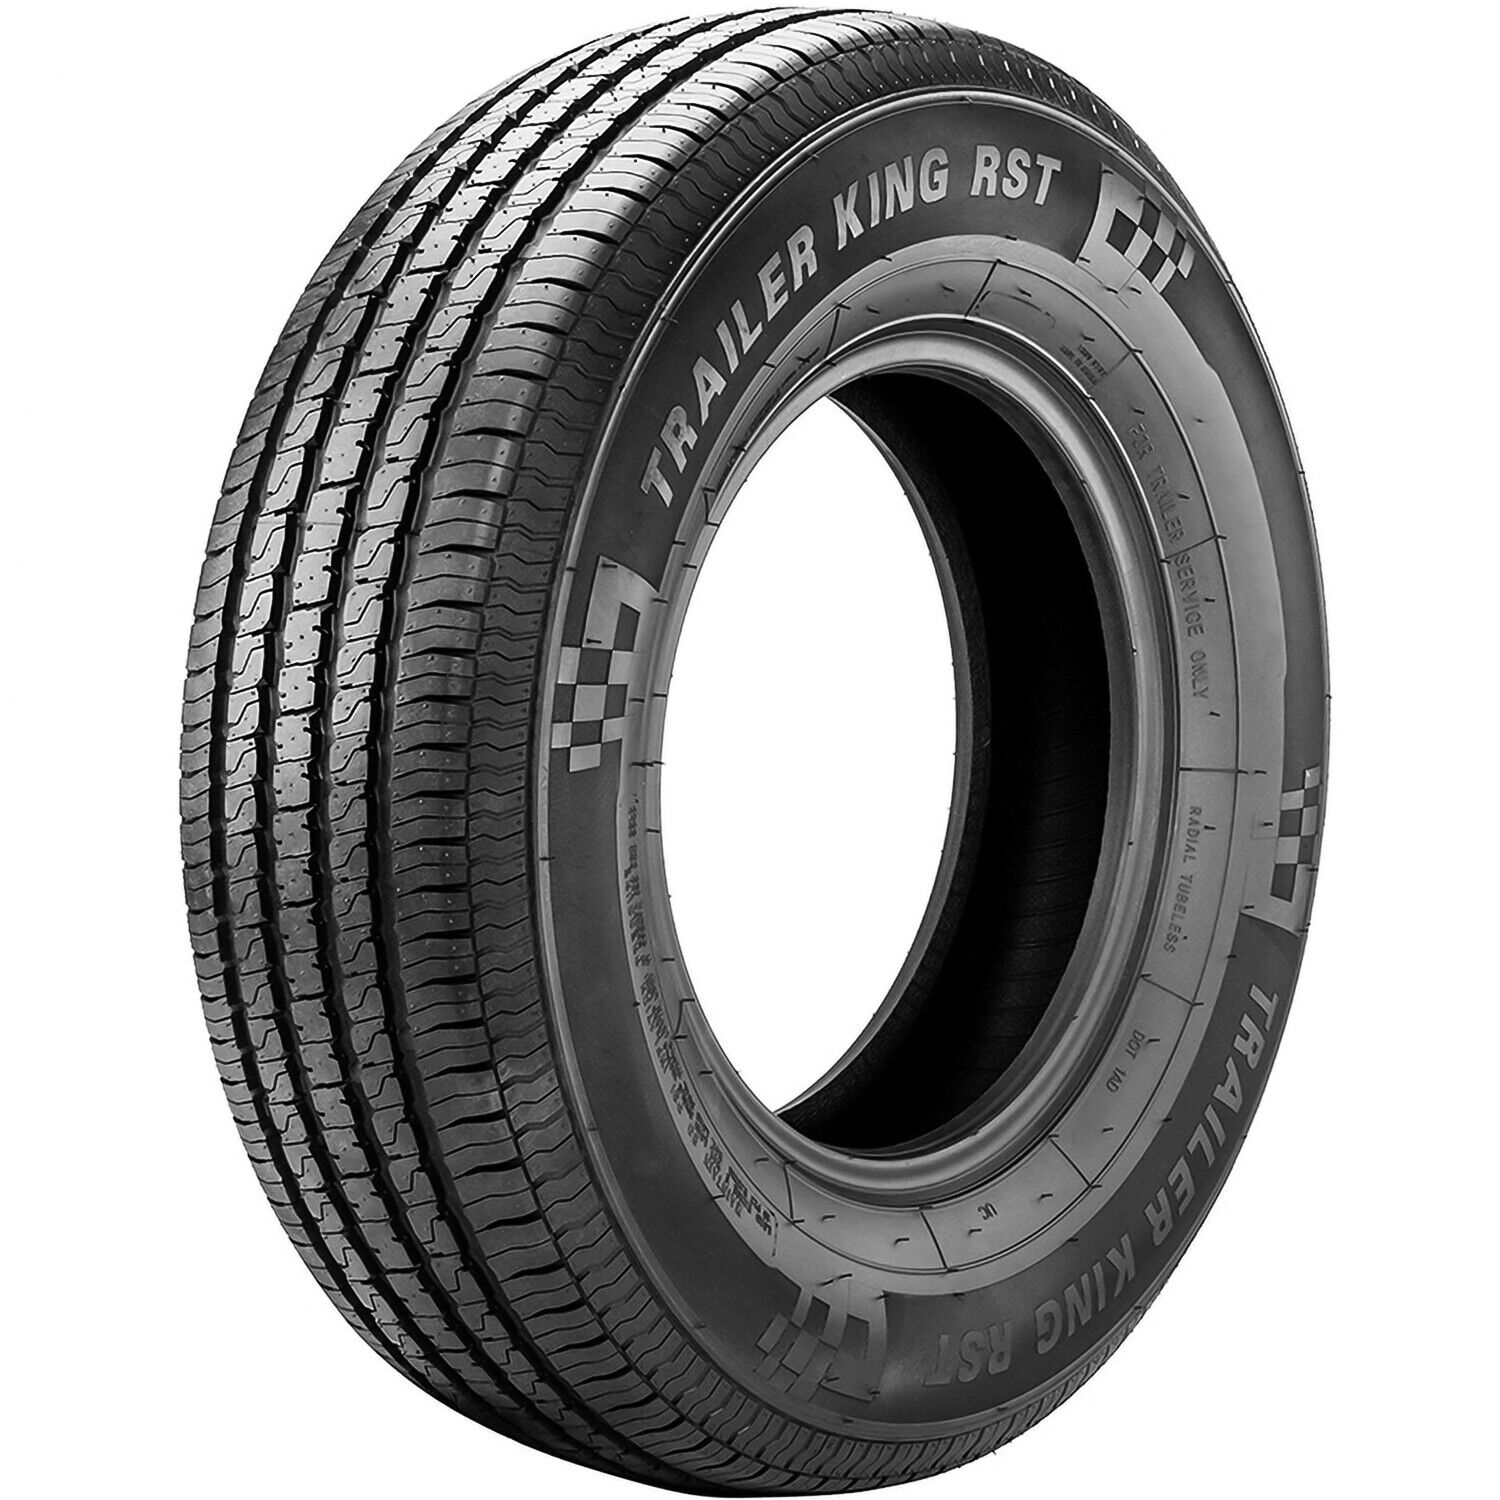 4 Tires Trailer King RST Steel Belted ST 205/75R15 205-75-15 205/75/15 D 8 Ply